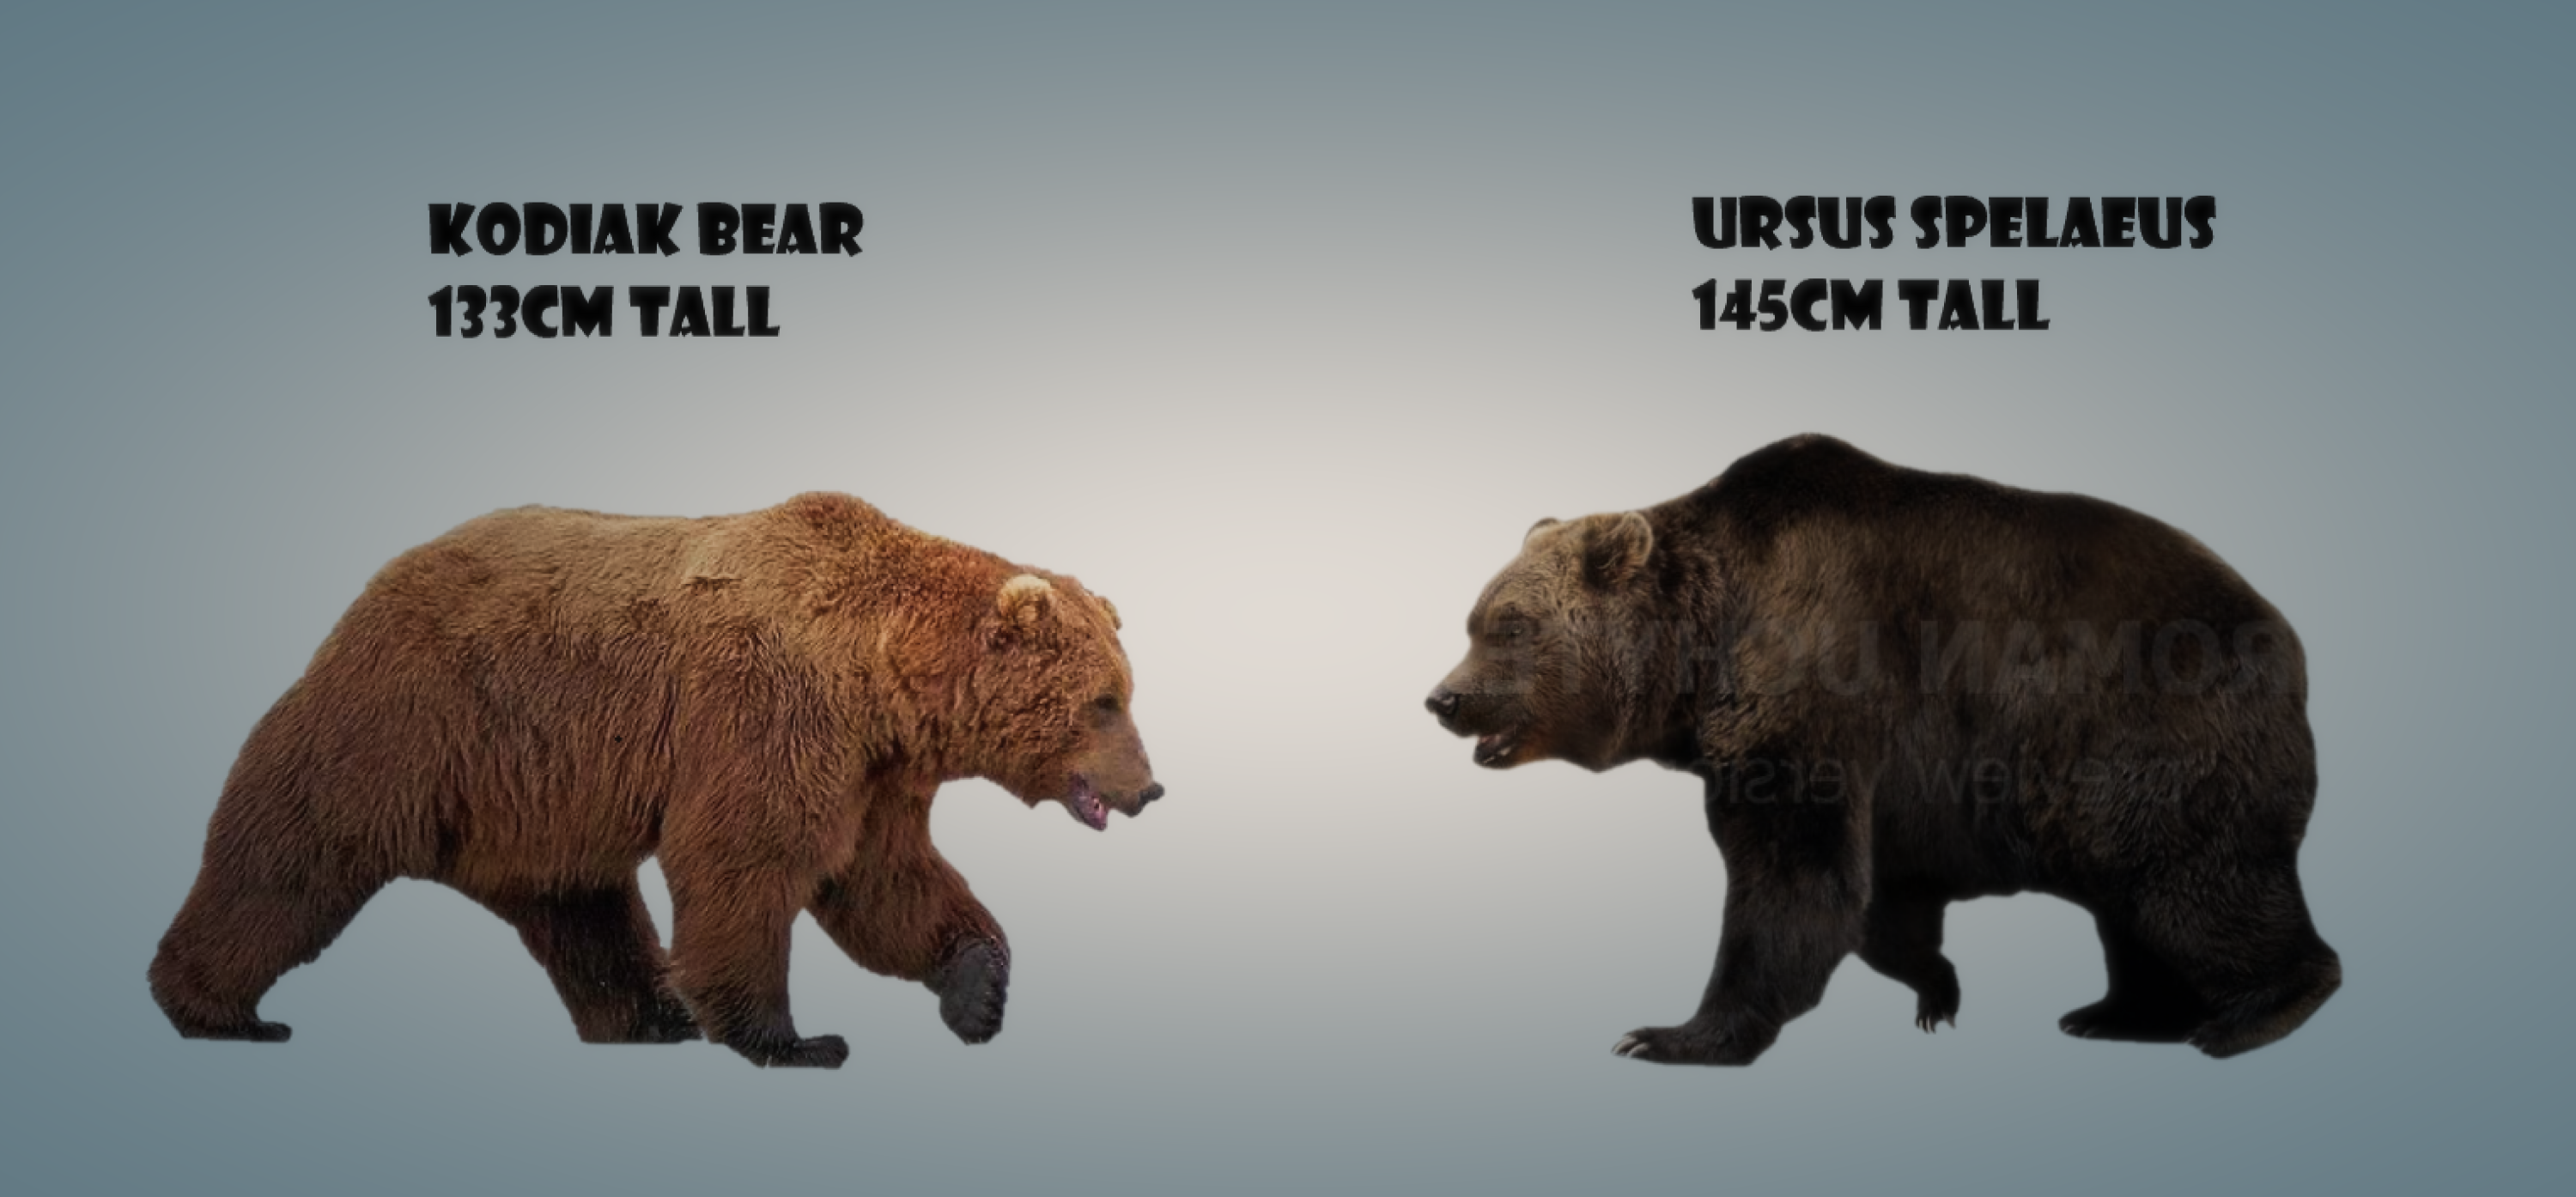 kodiak bear size comparison